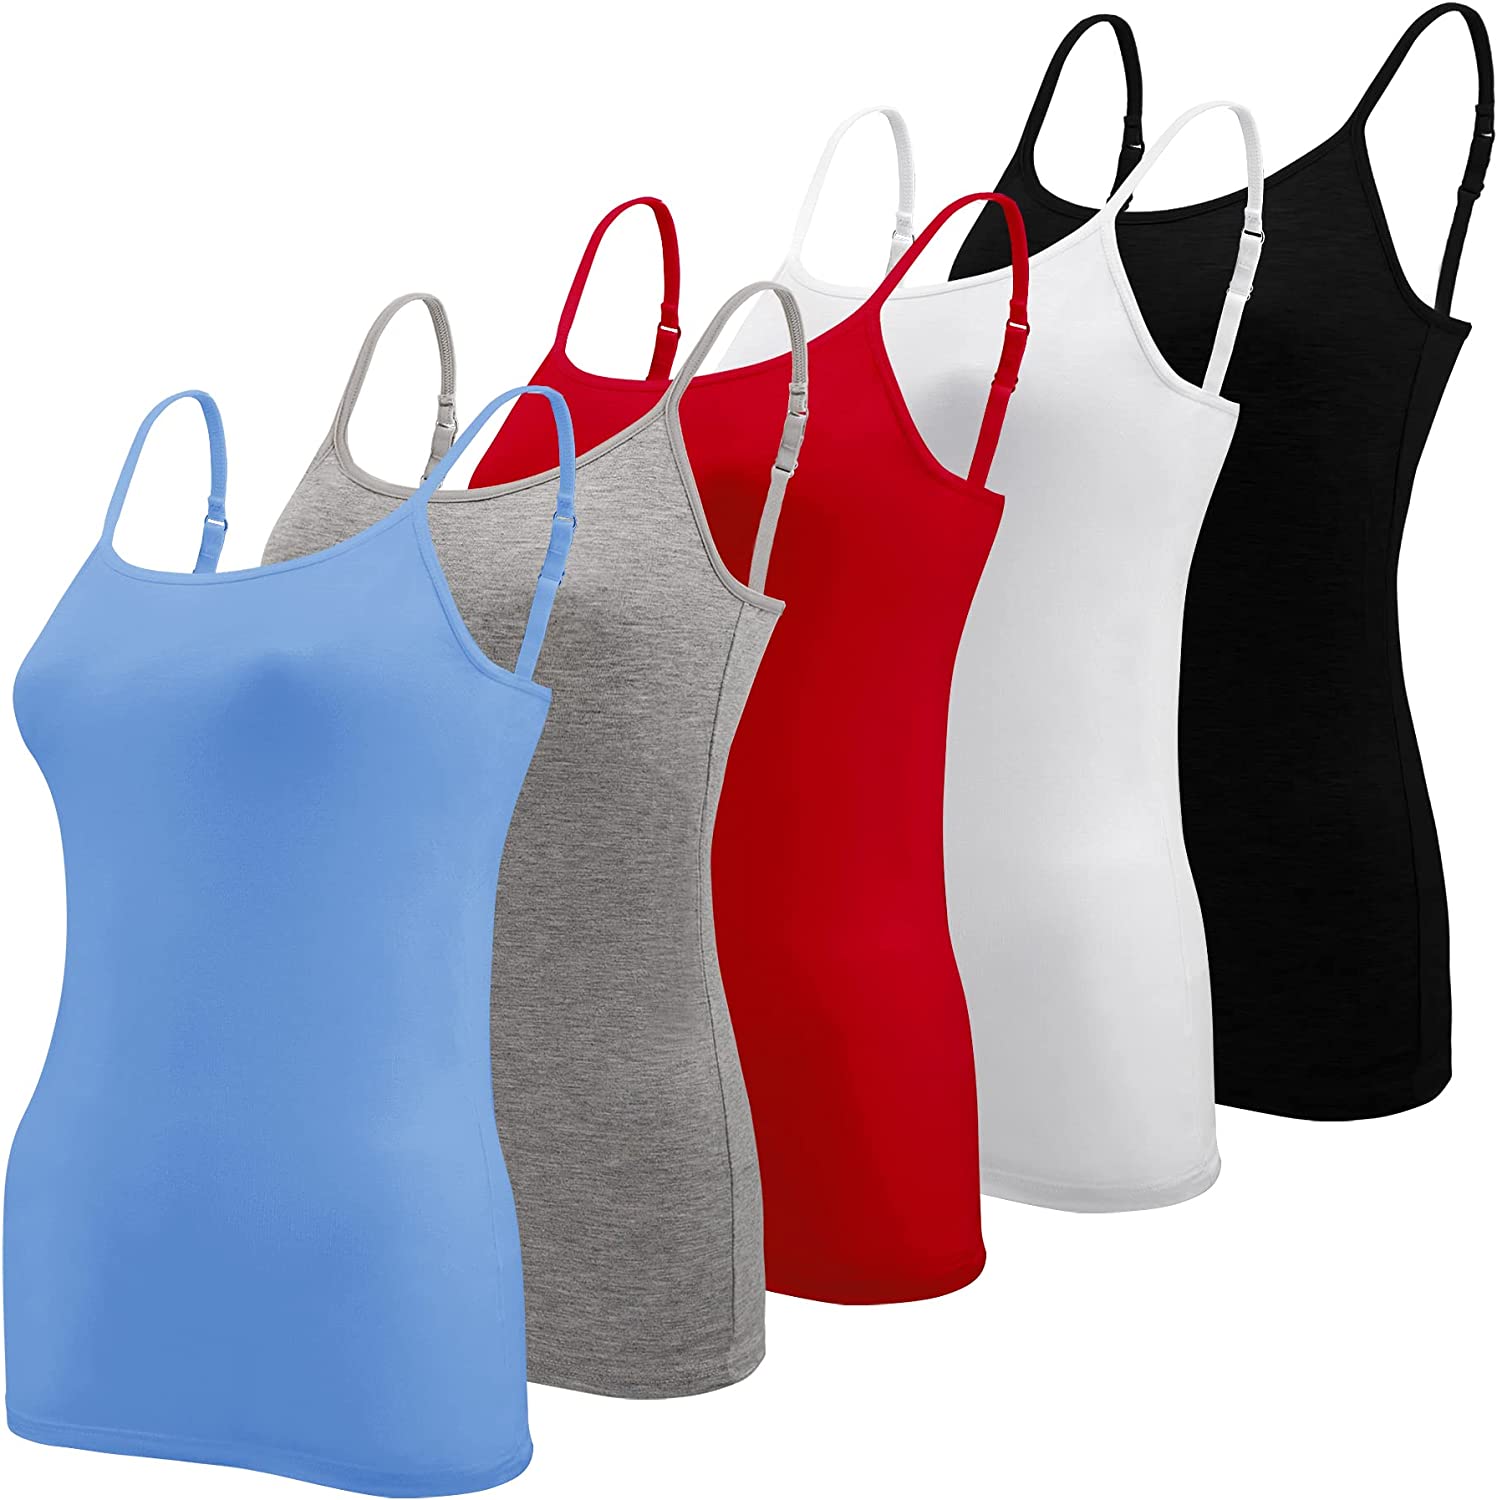 BQTQ 5 Pcs Tank Tops For Women Undershirt Sleeveless Under Shirts Tank Top